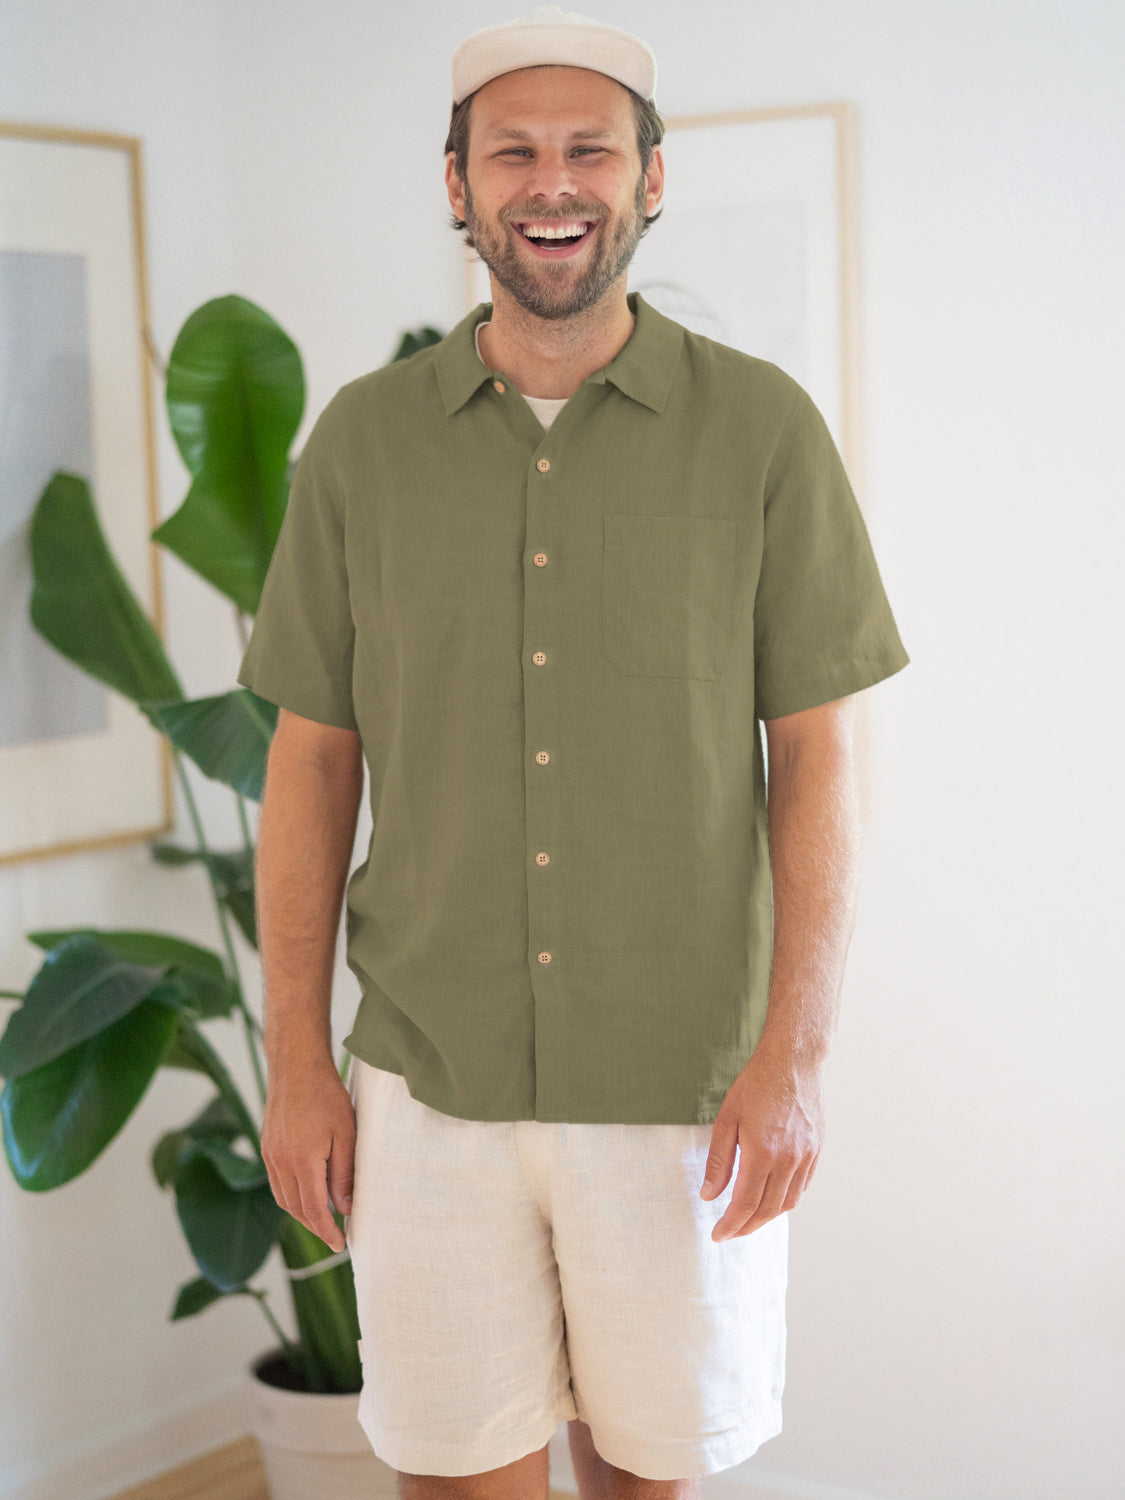 Philipp trägt das Friendly Fabrics FUXBAU FF Männer kurzarm Leinenhemd in grün